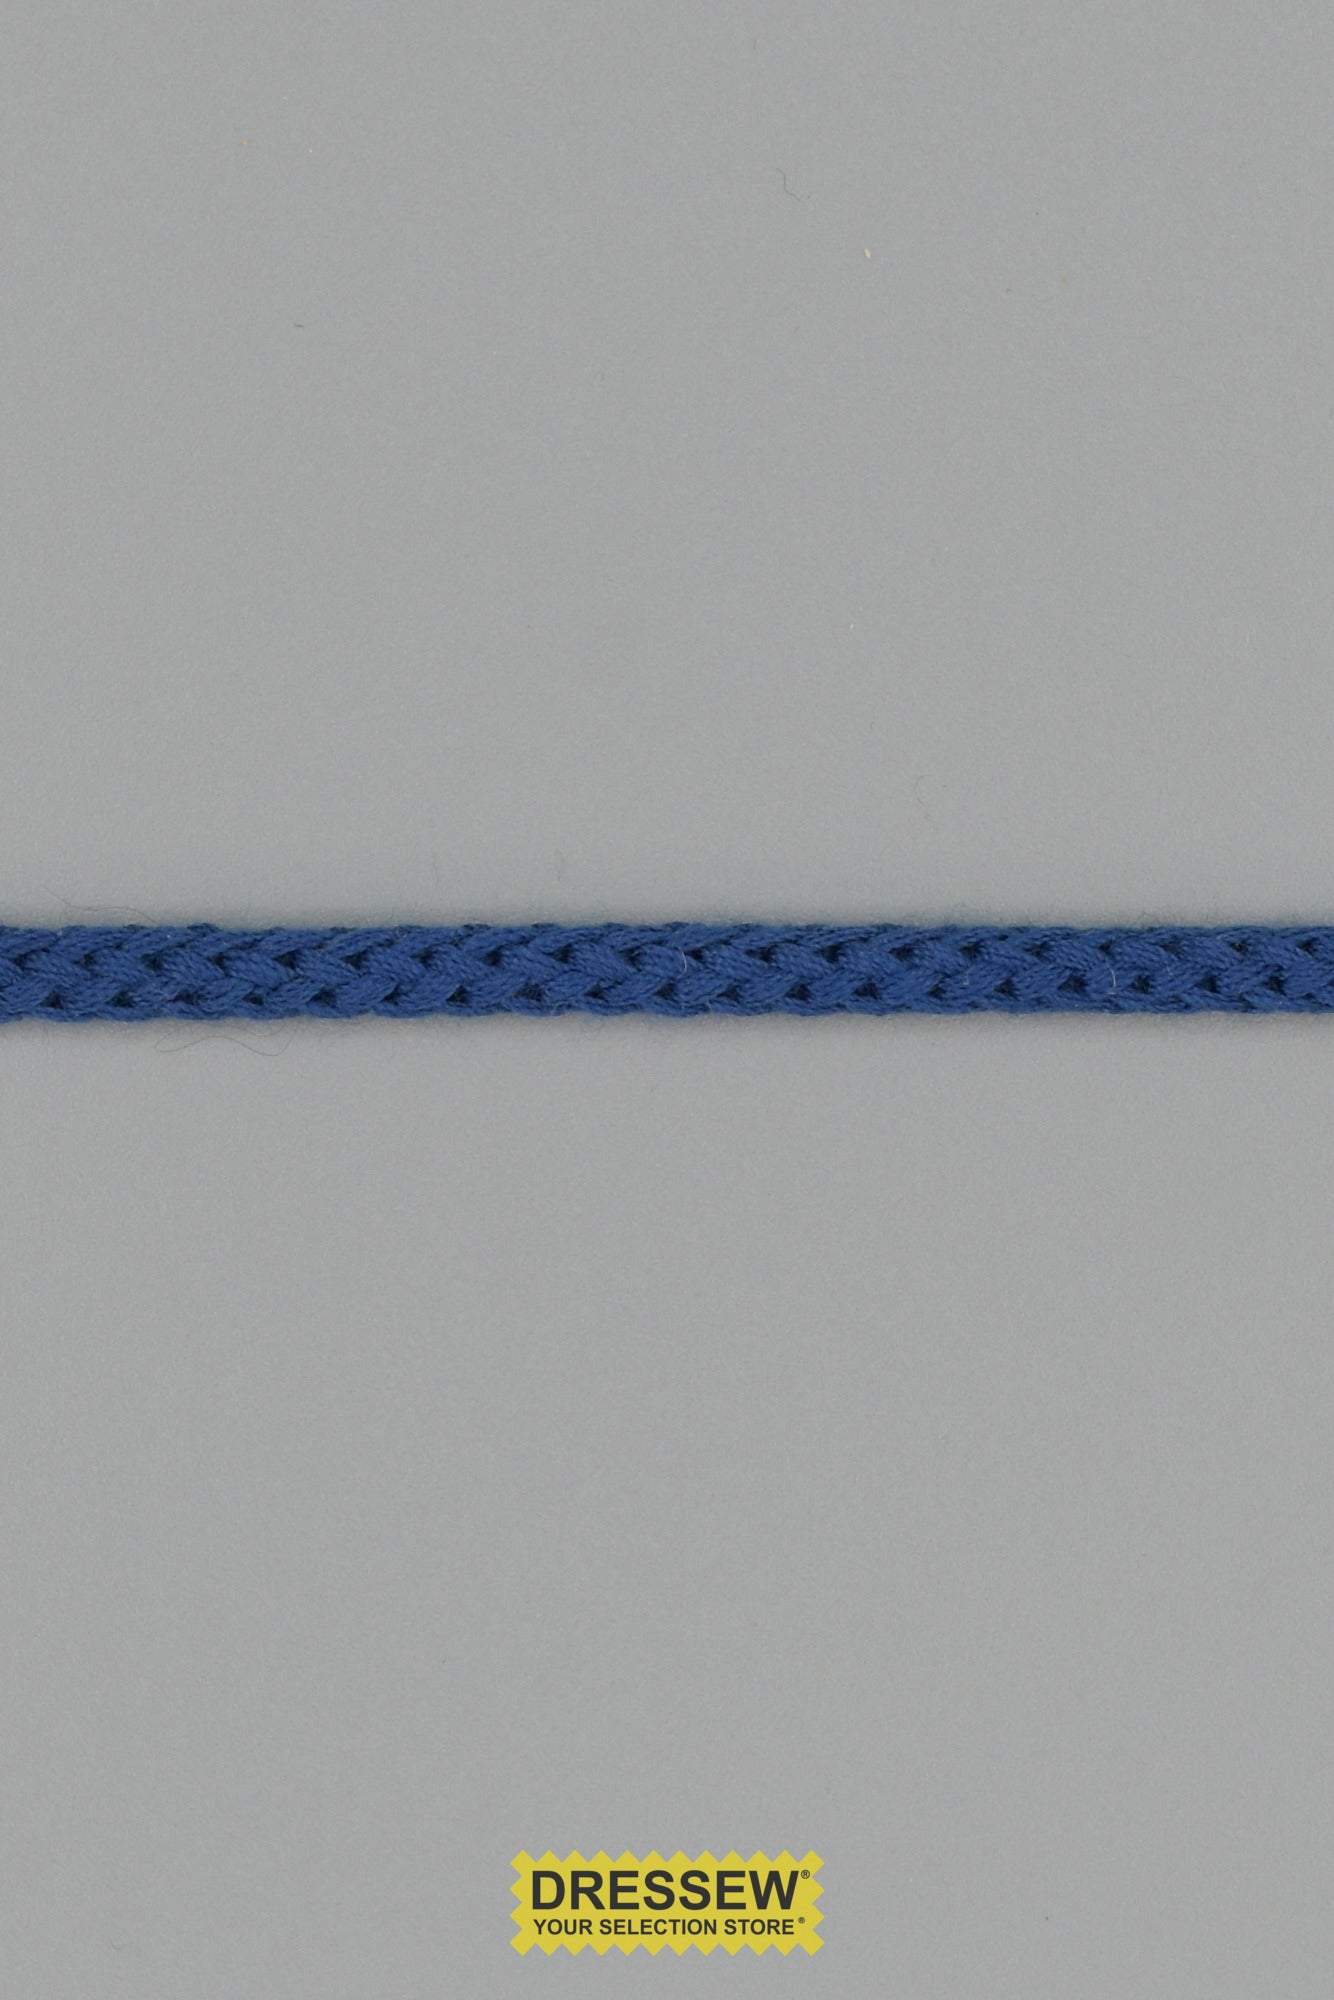 Cord 3mm (1/8") Royal